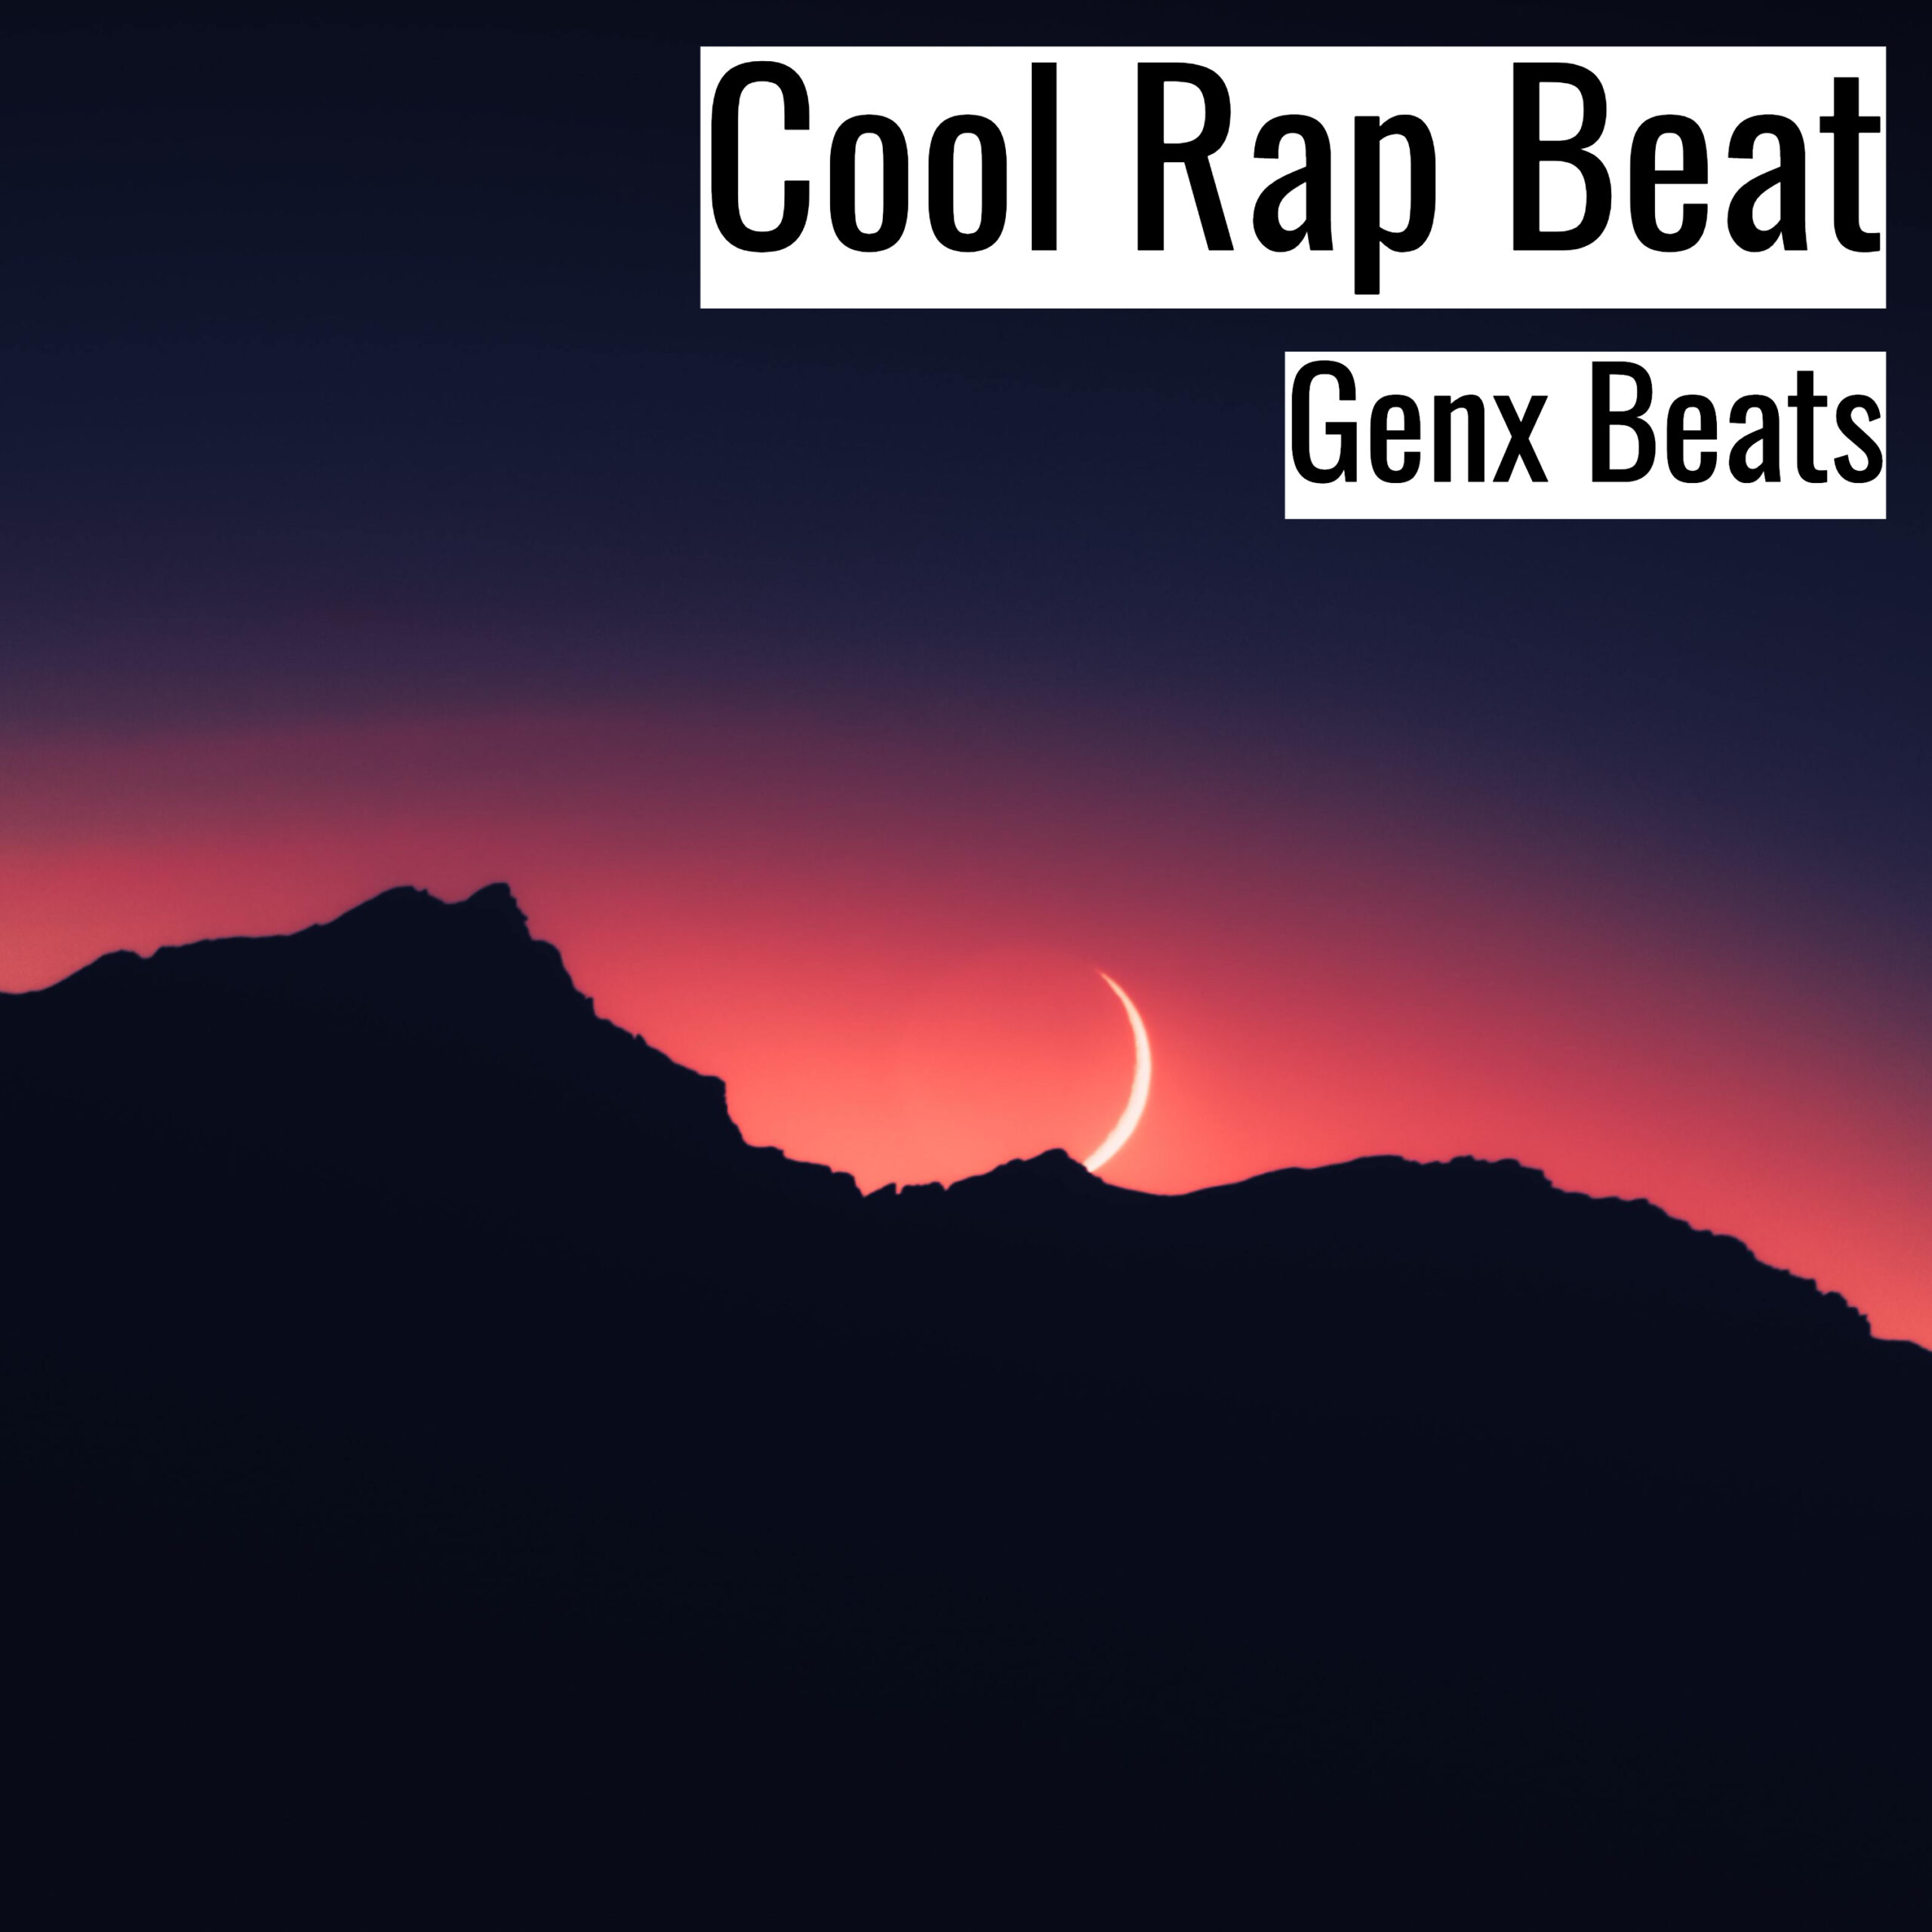 Cool Rap Beat scaled